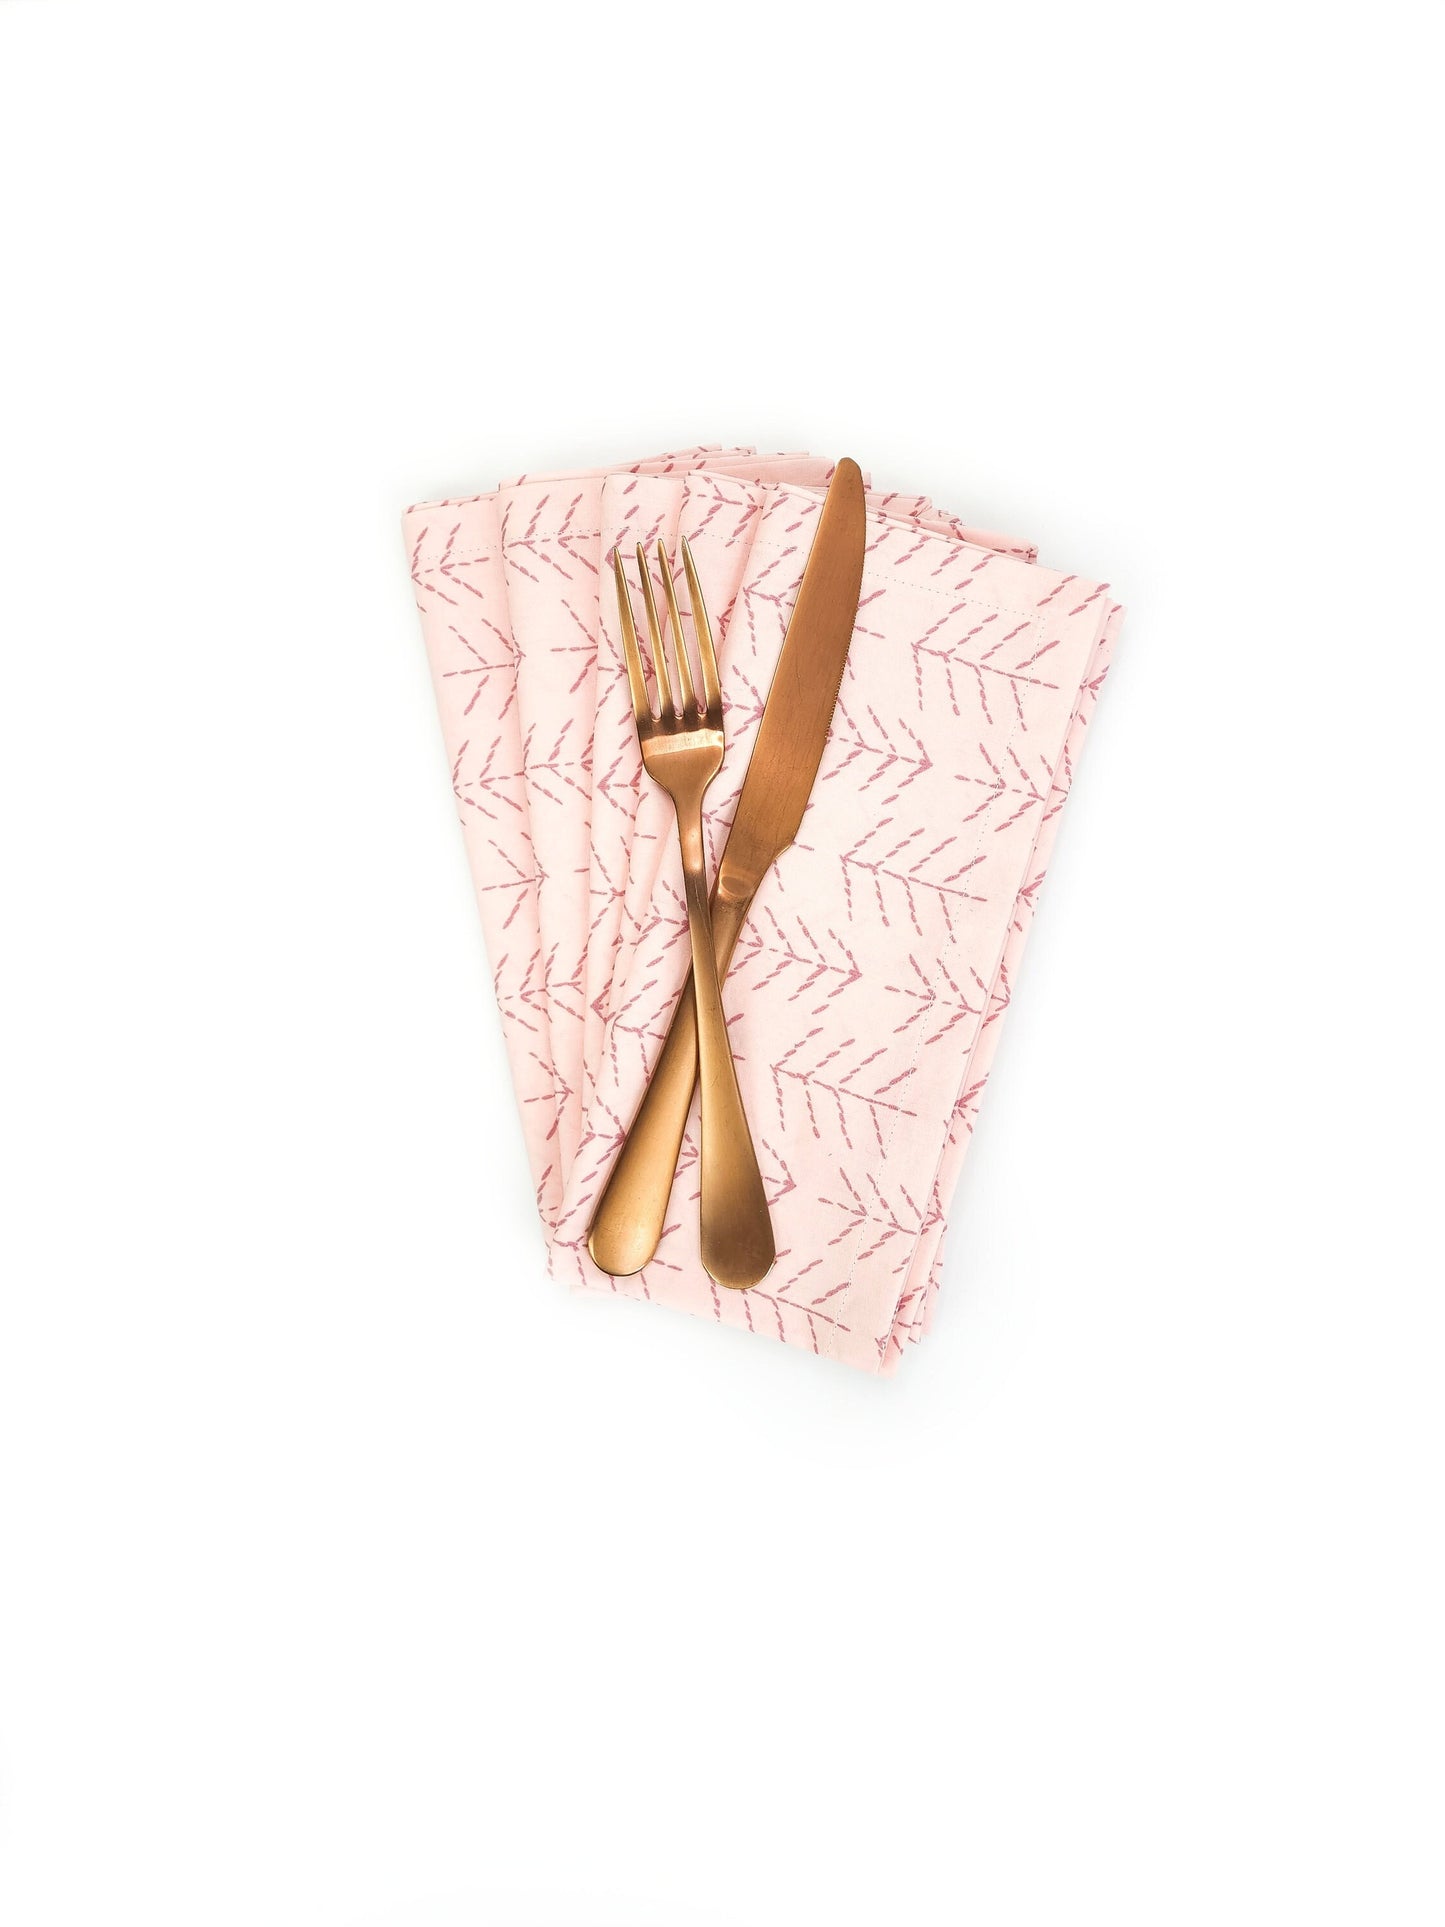 Pink Branch Cotton Cloth Napkins, Set of 5 Cloth Napkins